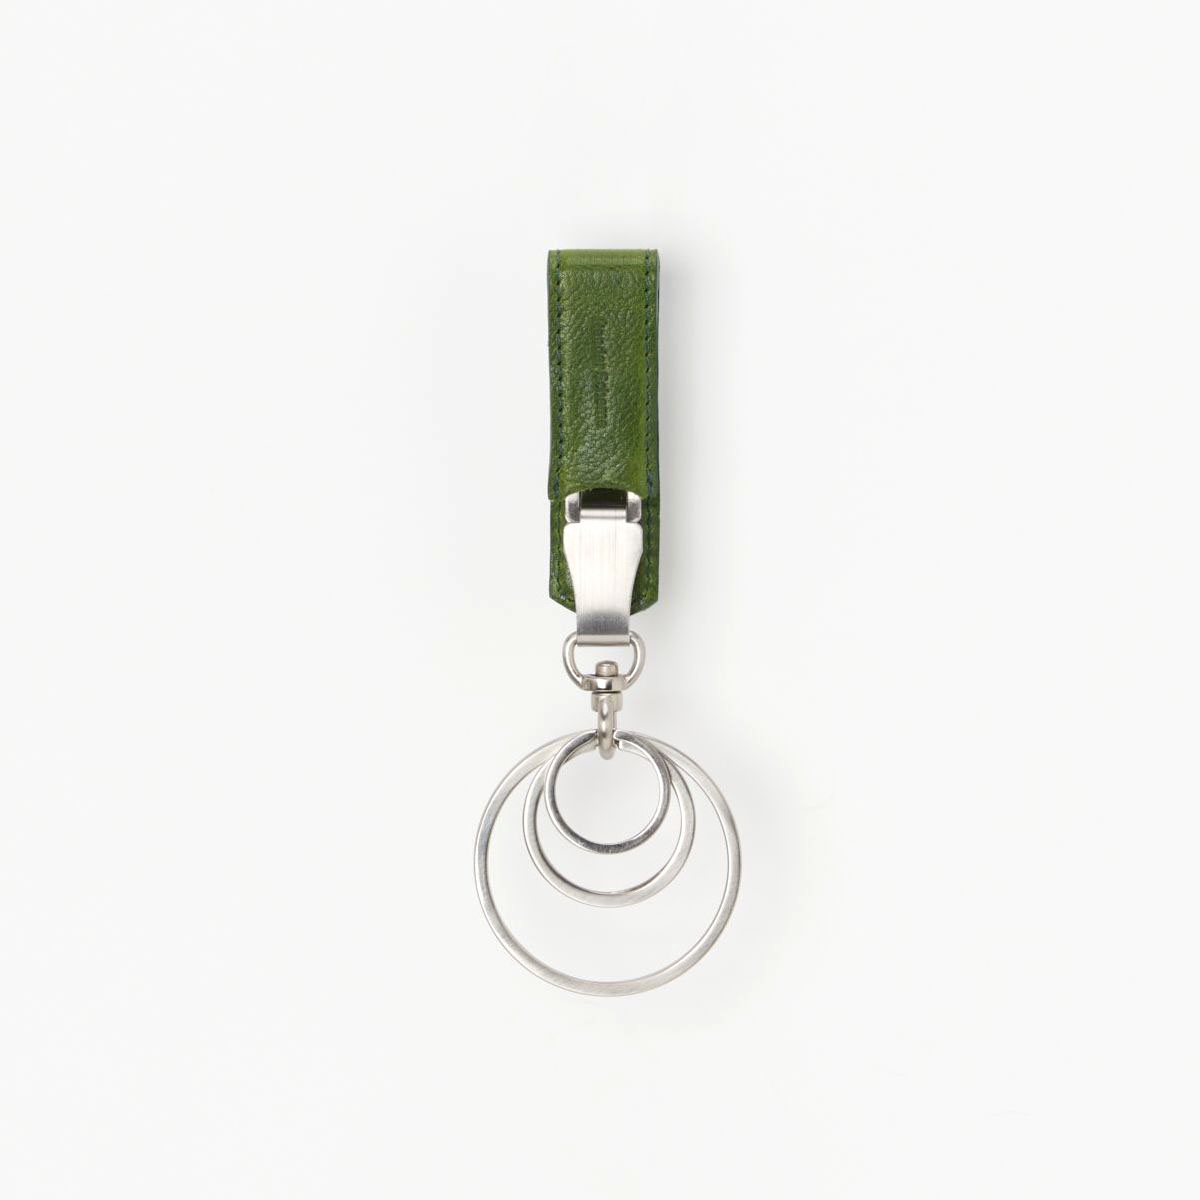 Hender Scheme / key clip (Lime Green)